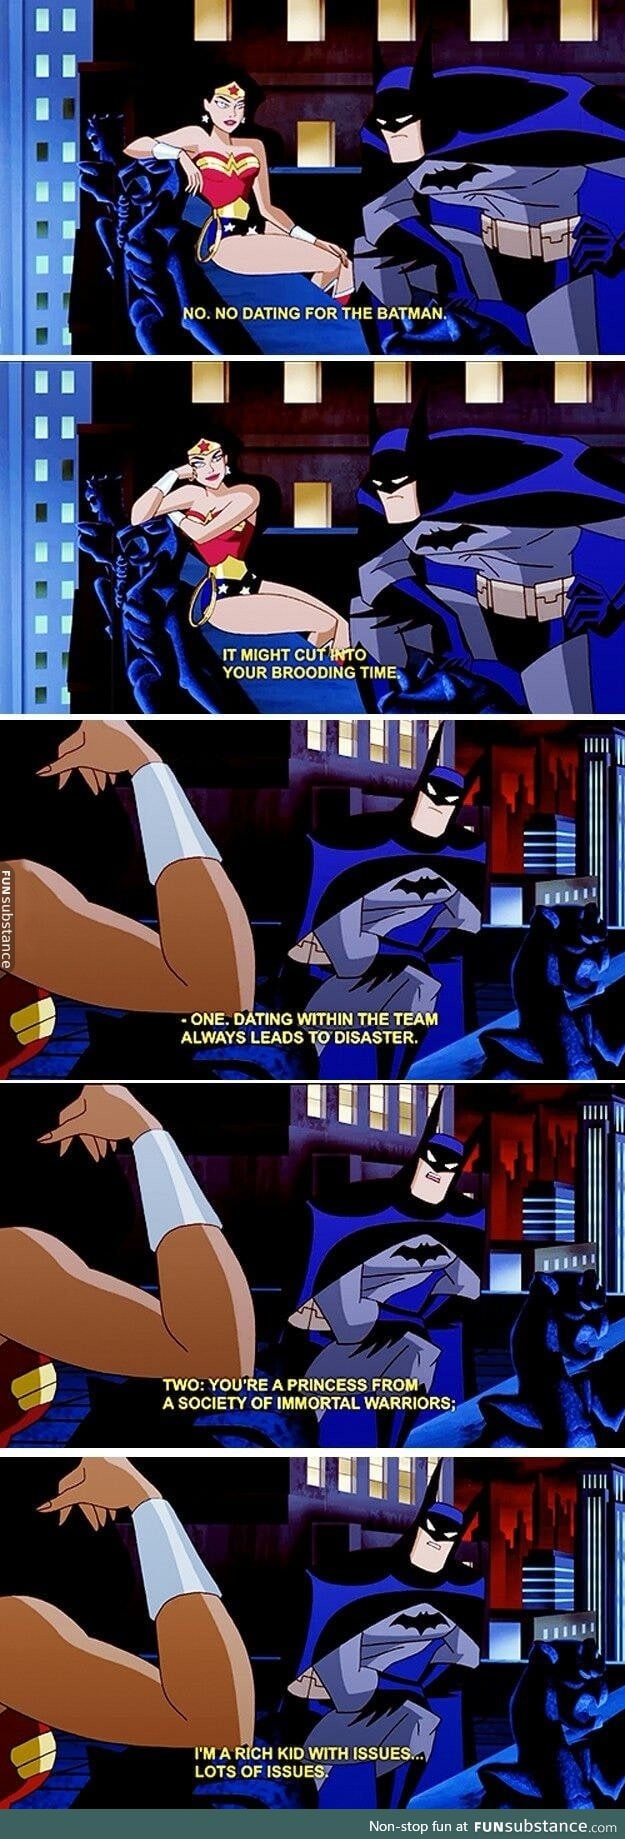 Batman being Batman!